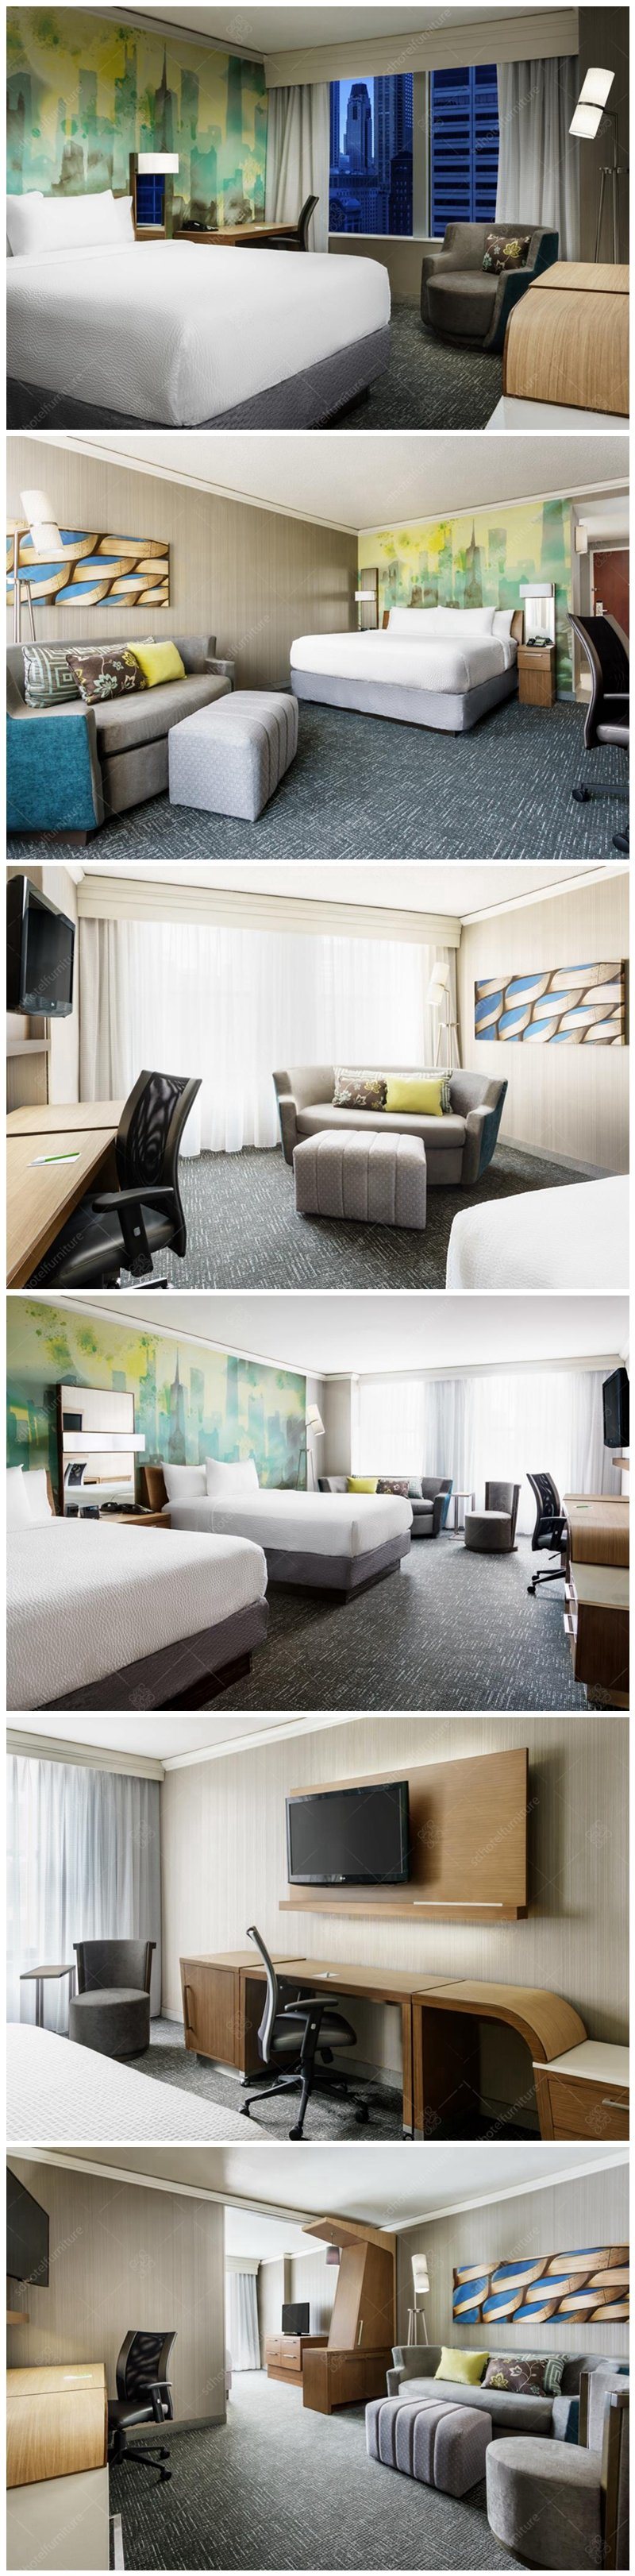 Latest Modern Design Hotel Bedroom Furniture Wooden Furniture Commercial Use